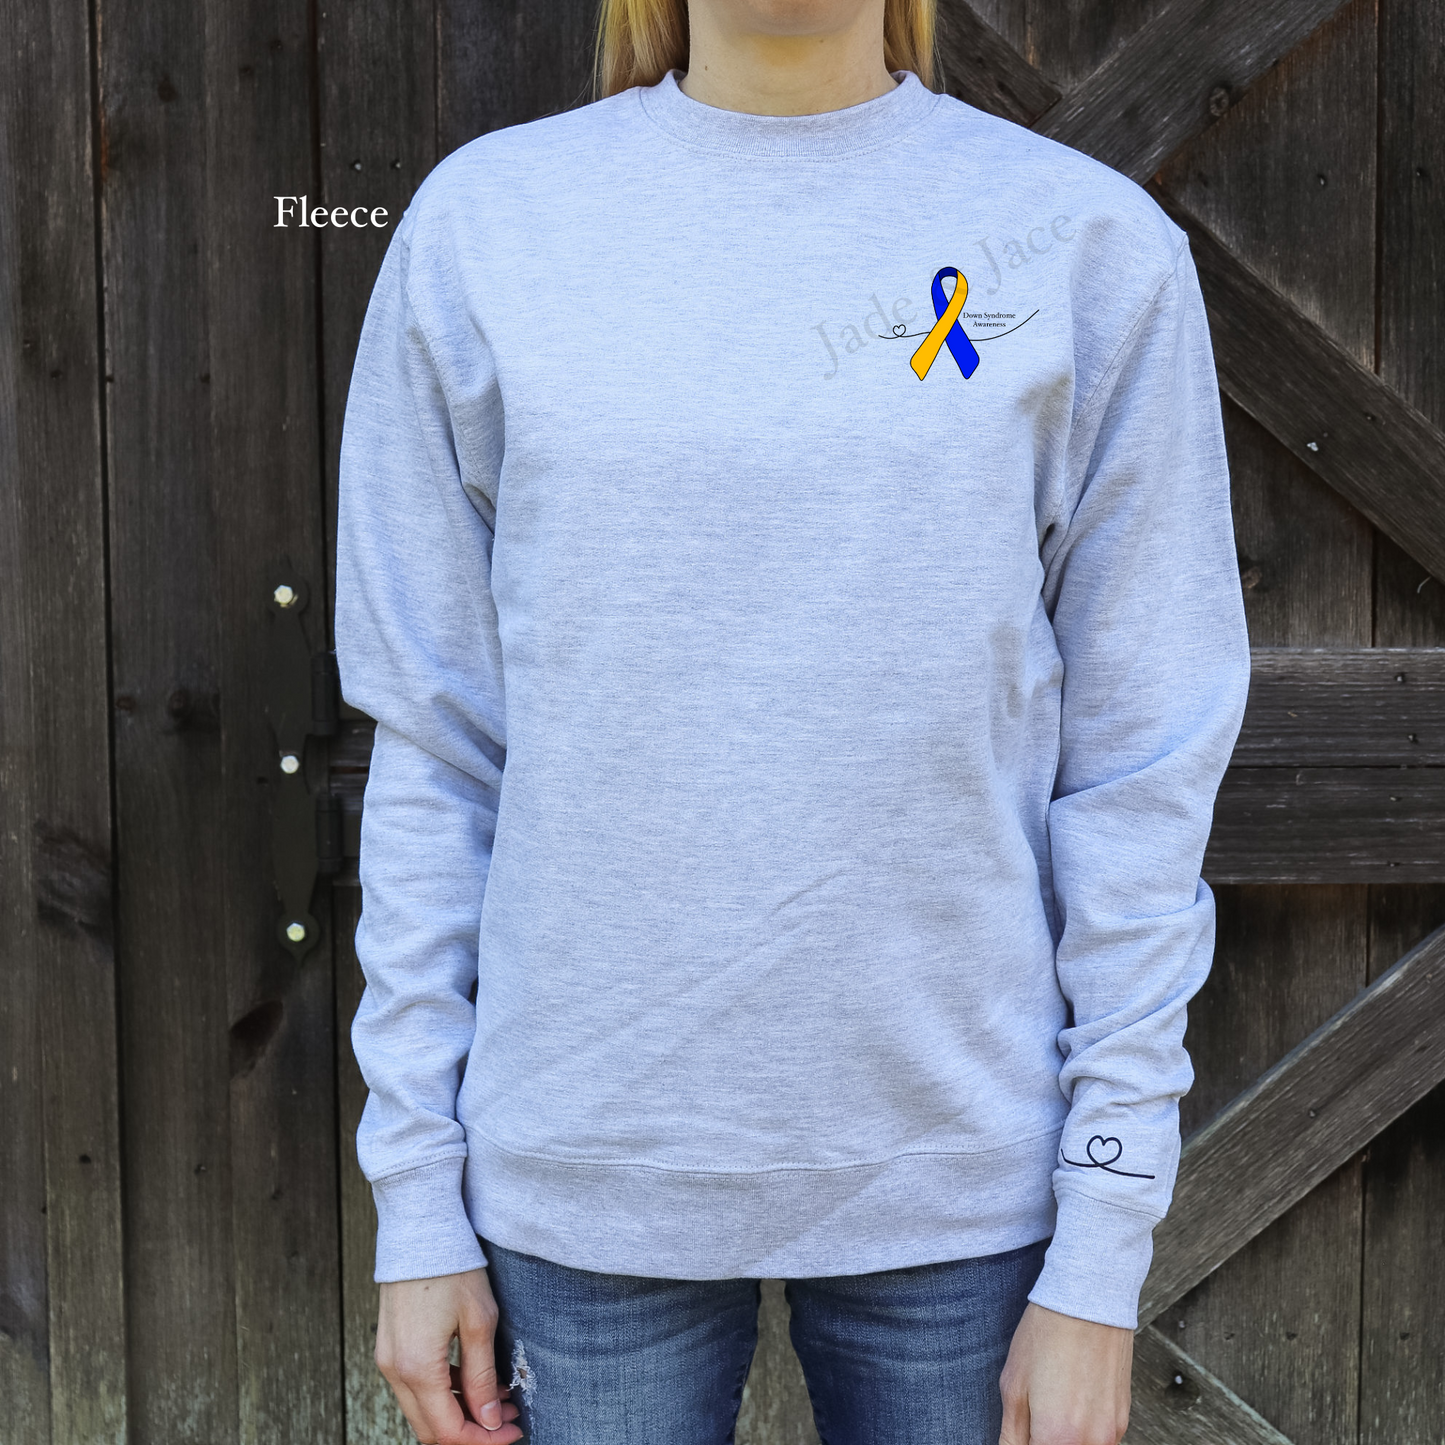 Down Syndrome Awareness Crewneck Sweatshirt